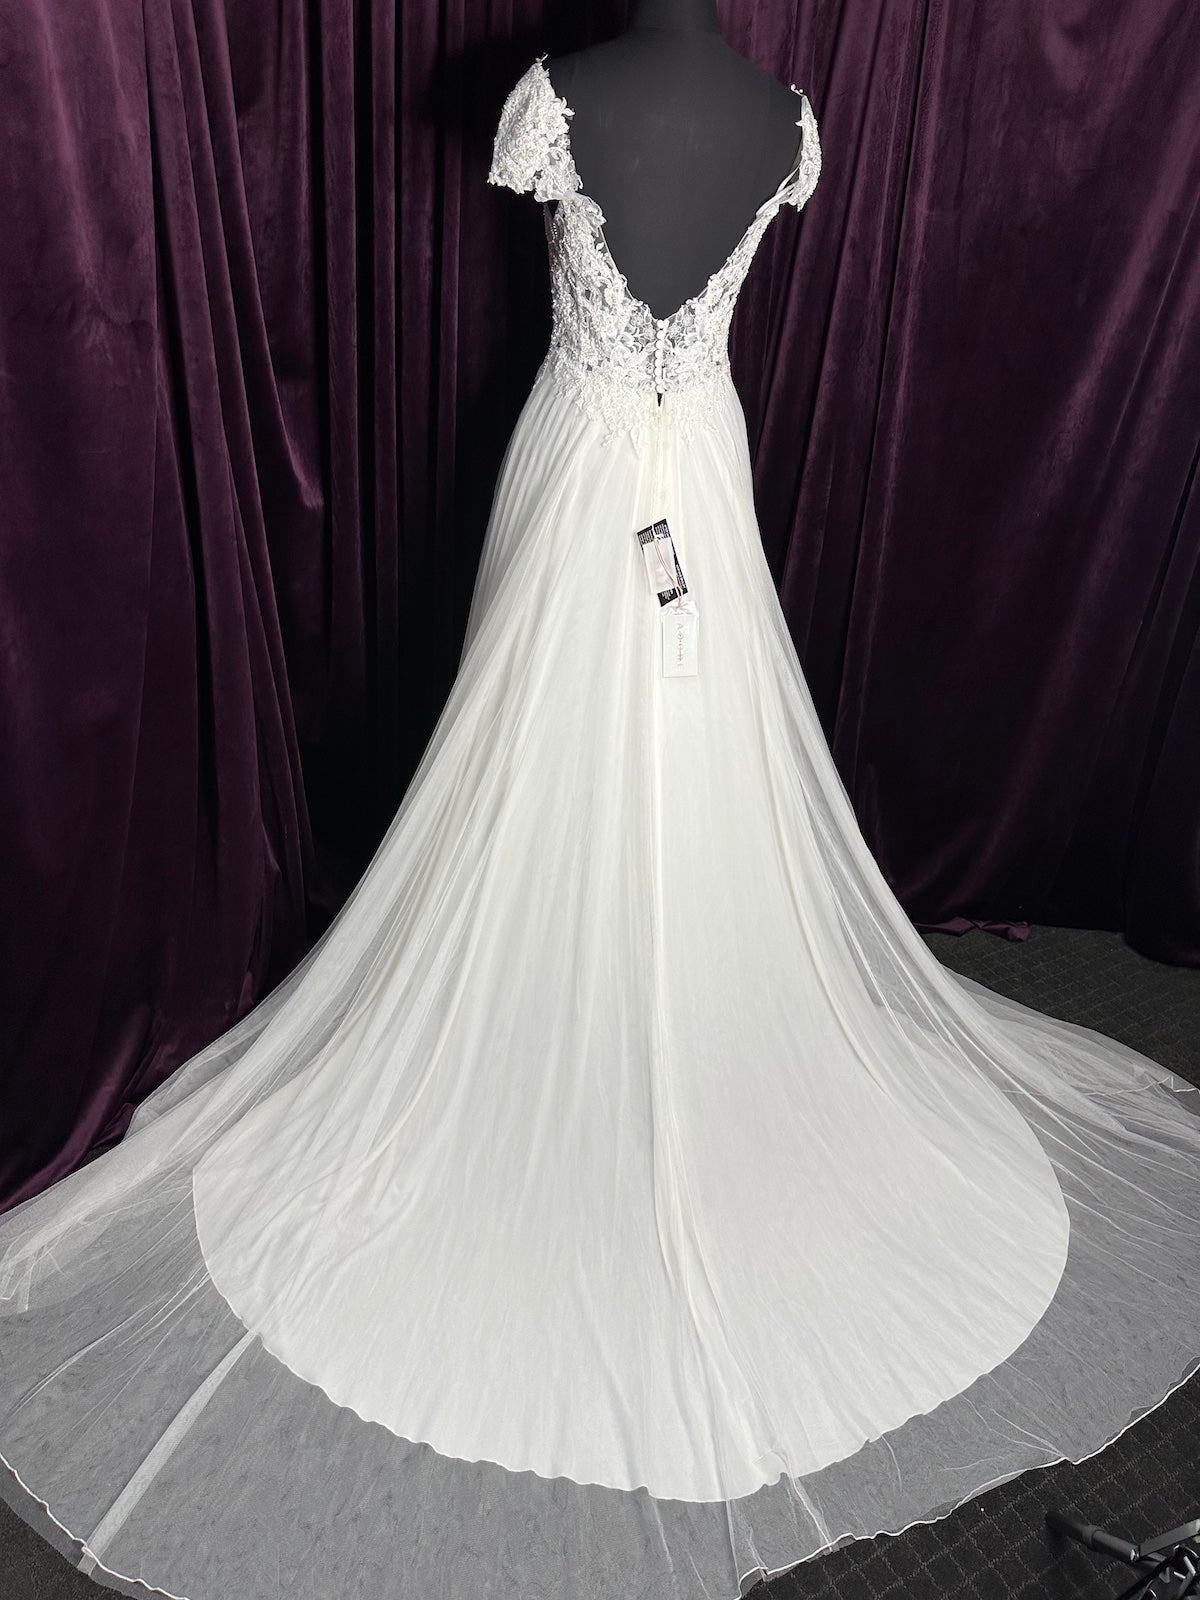 Scoop Neckline Lace Illusion Bodice Soft A-Line Skirt Wedding Dresses Online - #11131